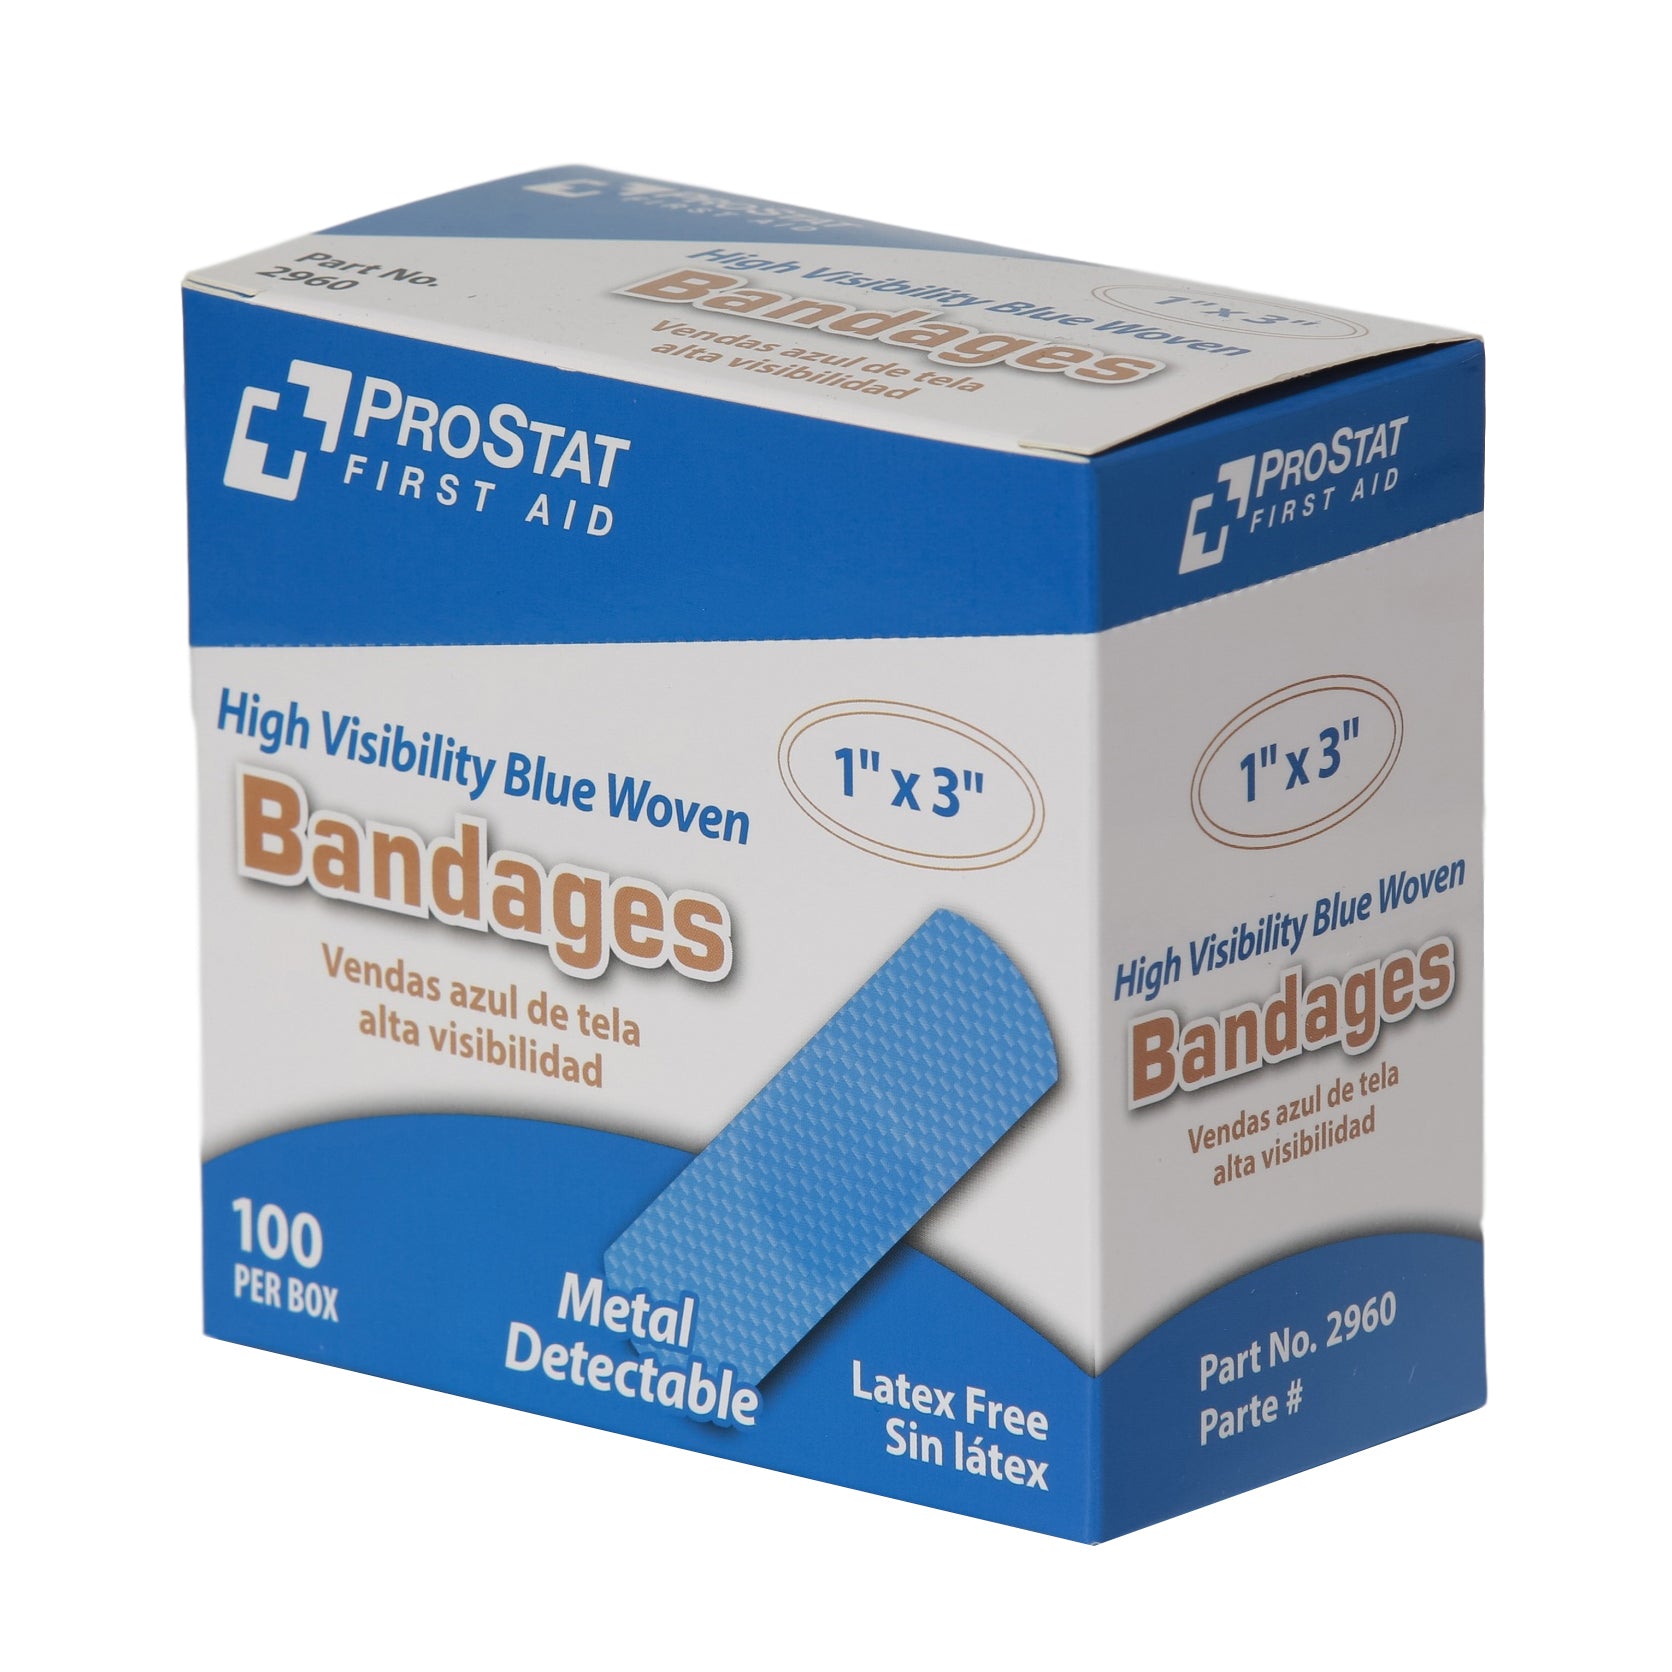 High Visibility Blue Metal Detectable Aid Box 100 | ABC Supplies First Bandages - Per